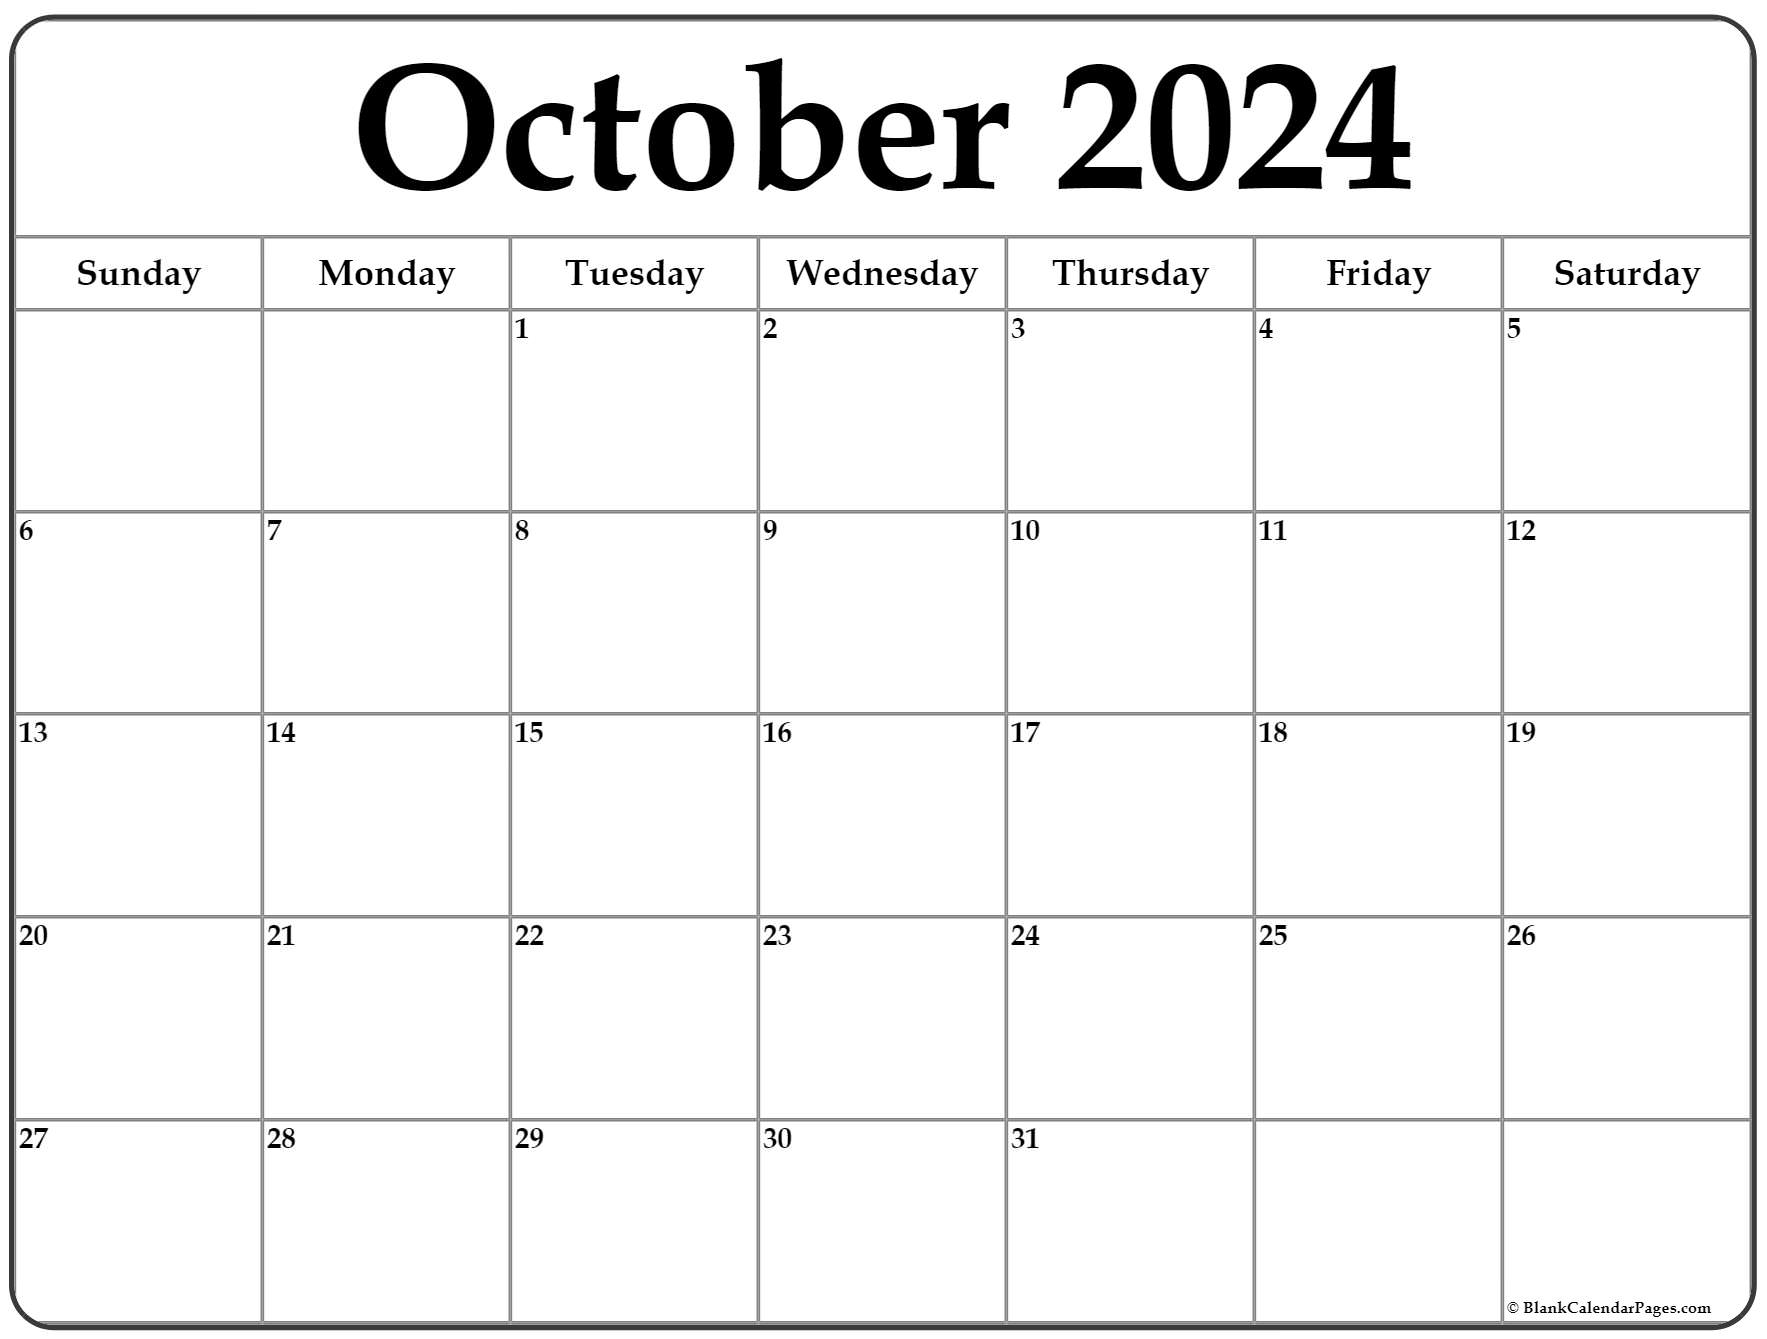 October 2024 Printable Calendar Template Free adela romonda